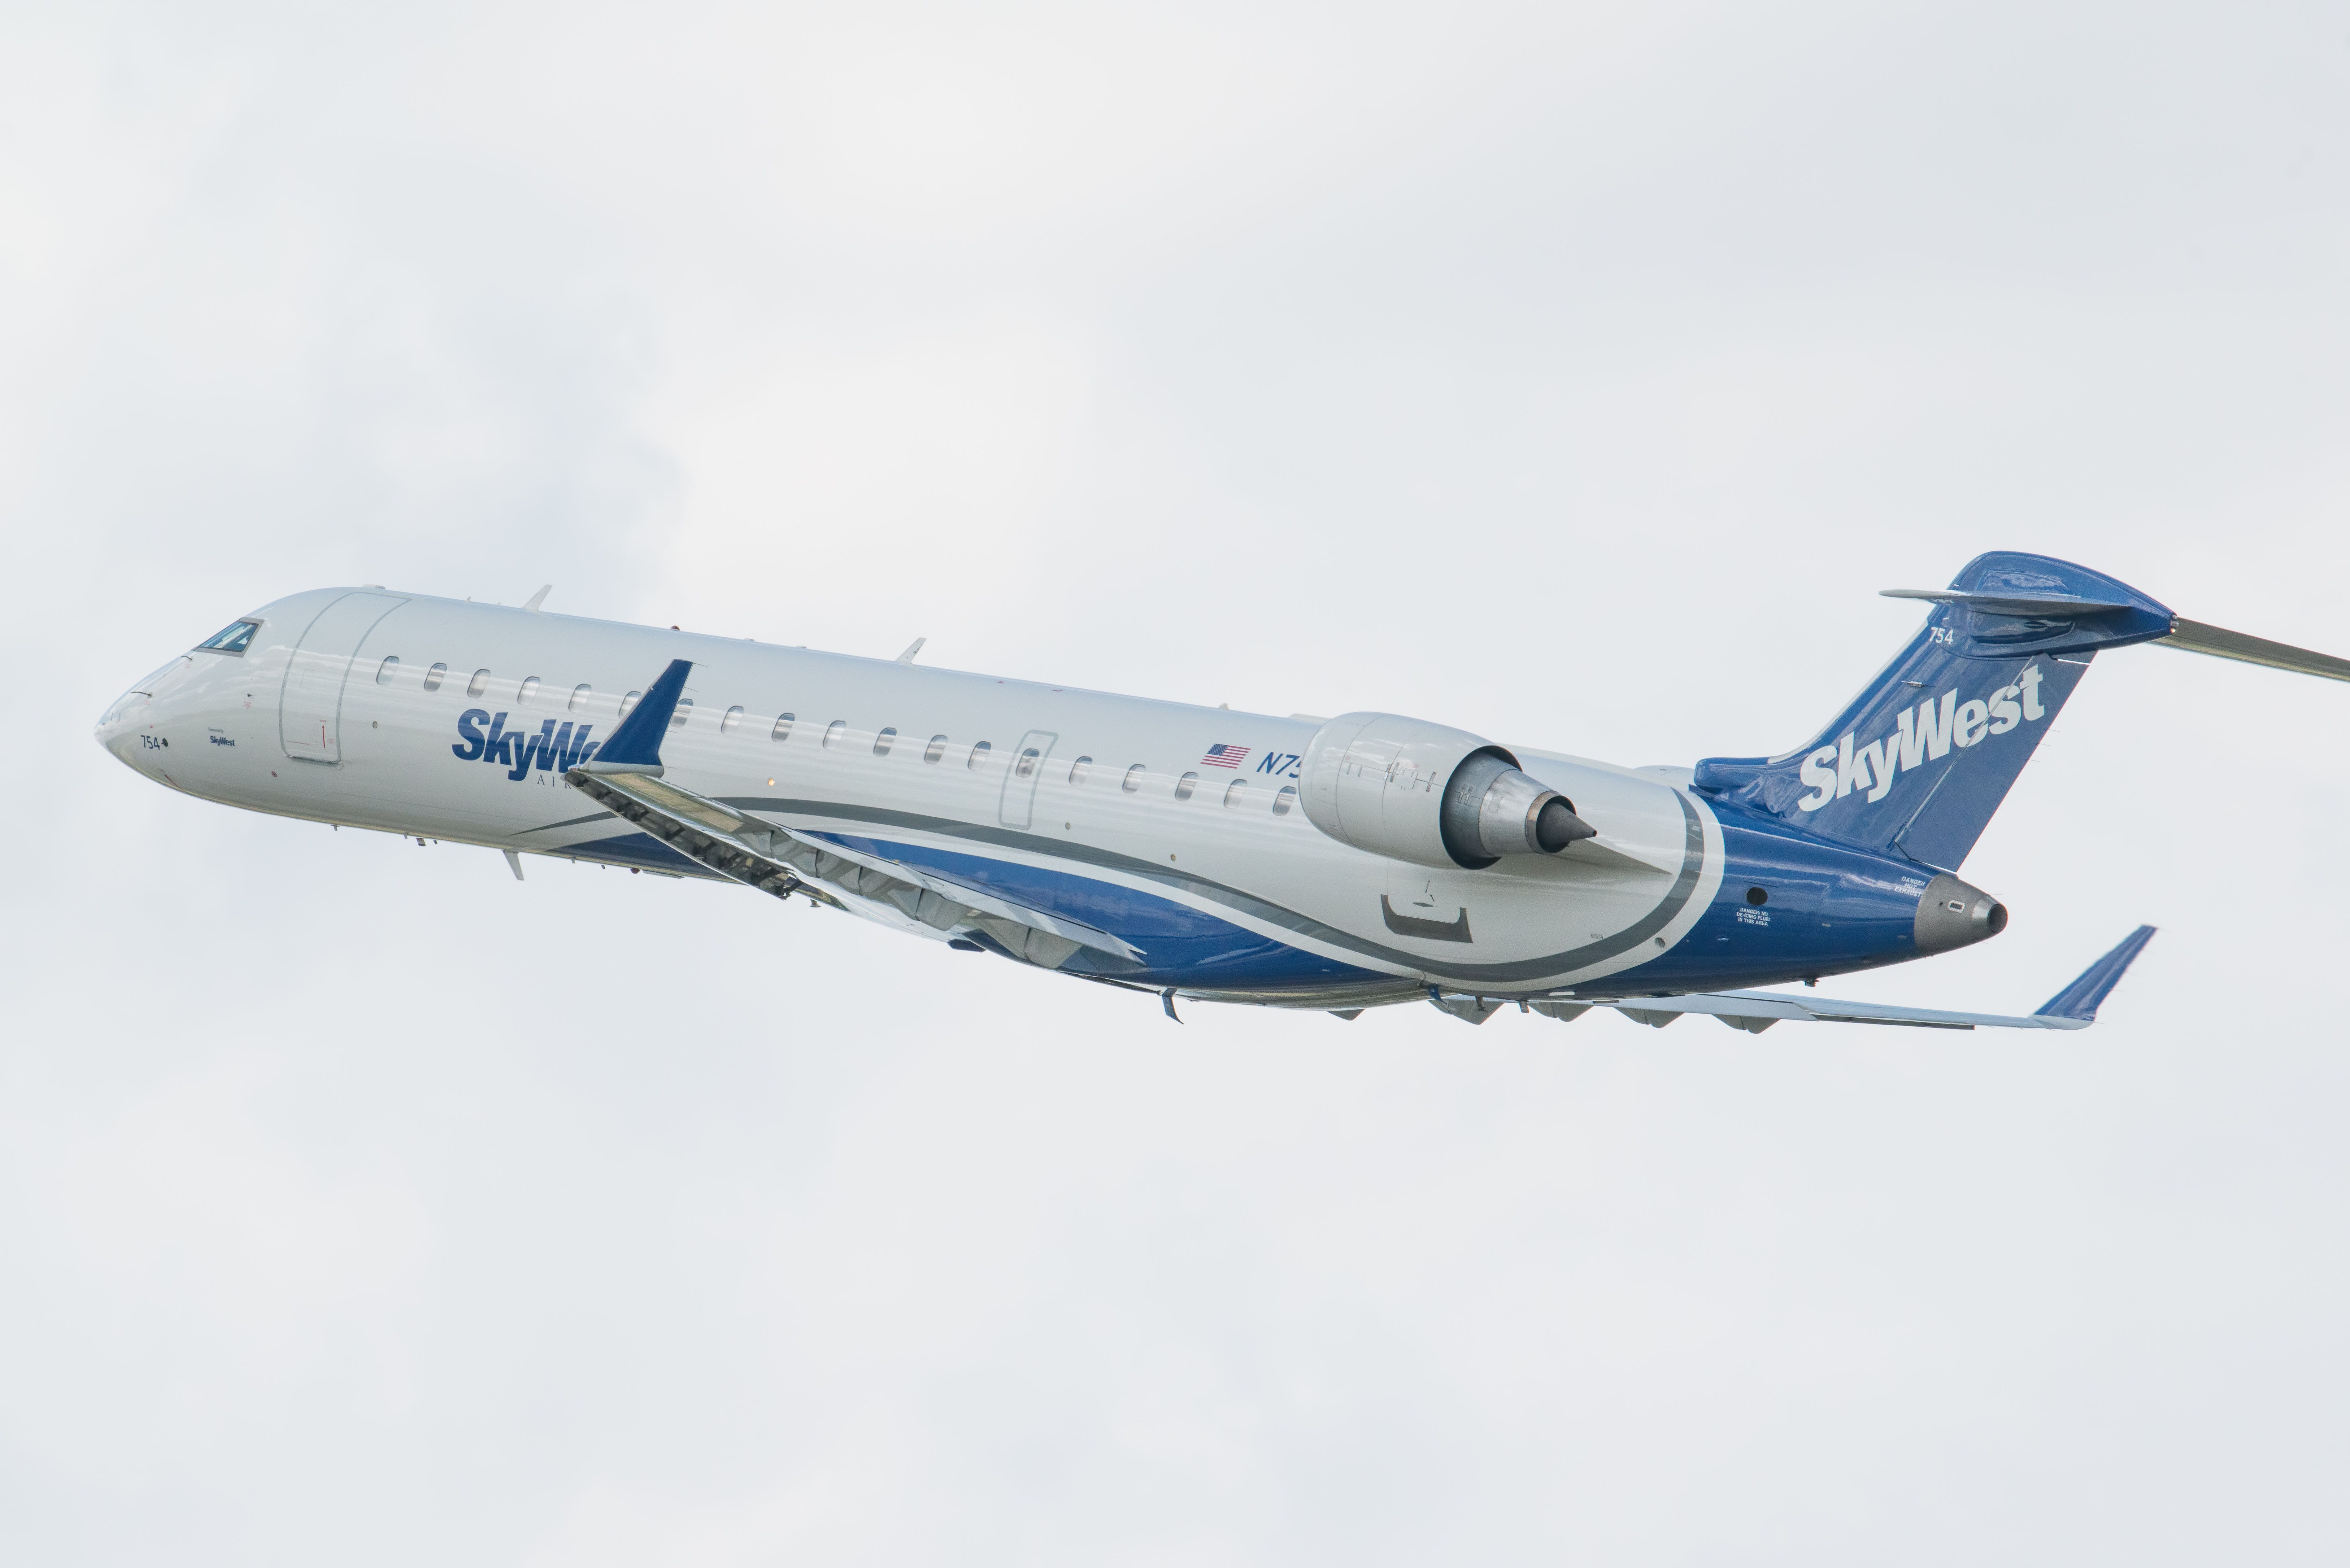 SkyWest CRJ-700 taking off.